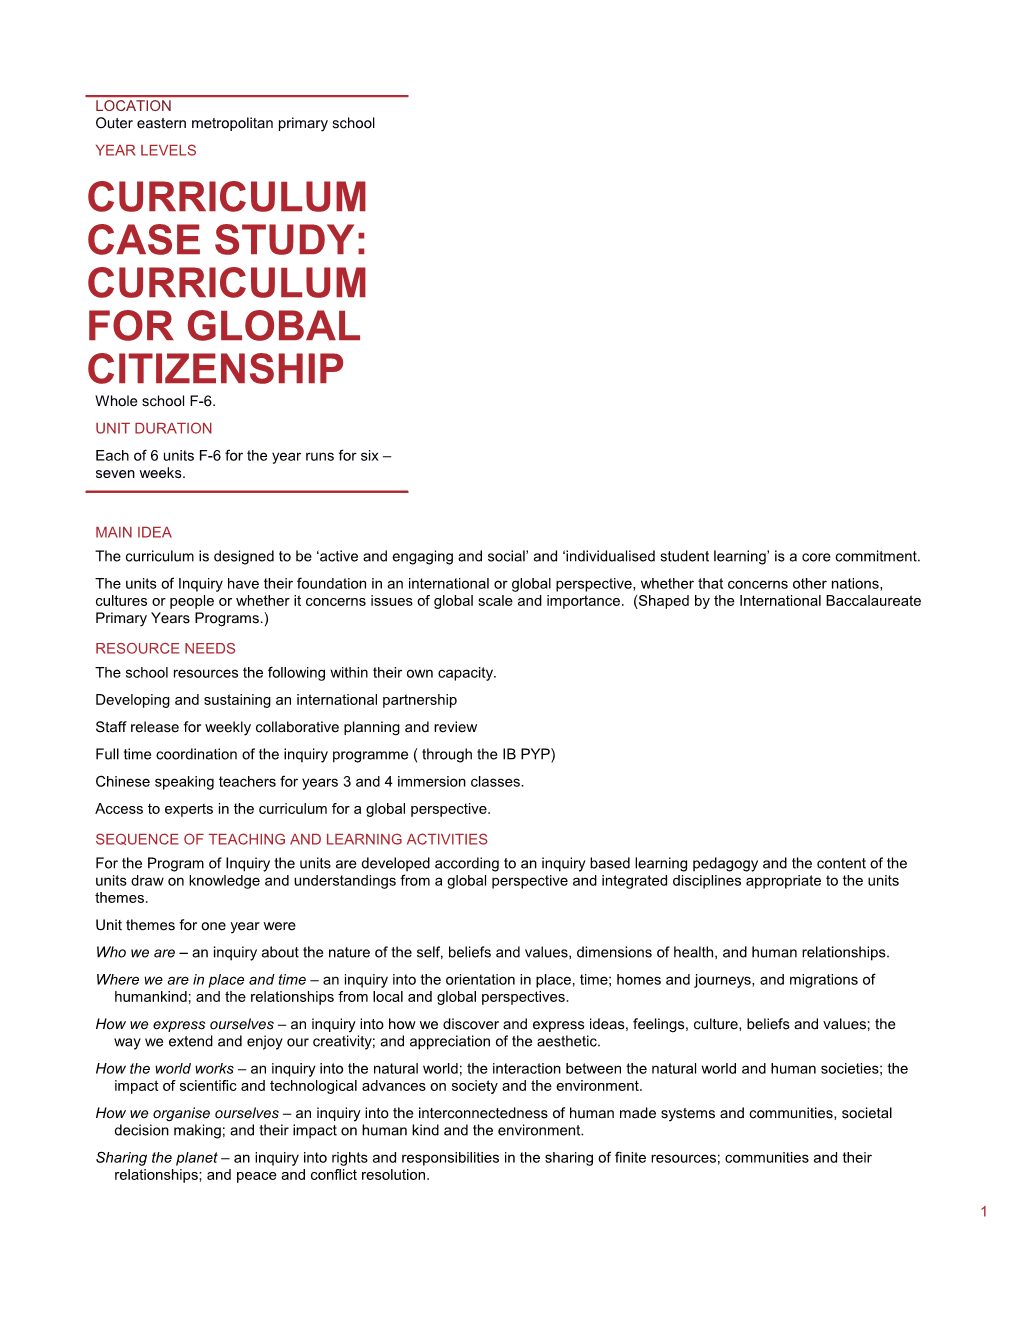 Curriculum Case Study: Curriculum for Global Citizenship